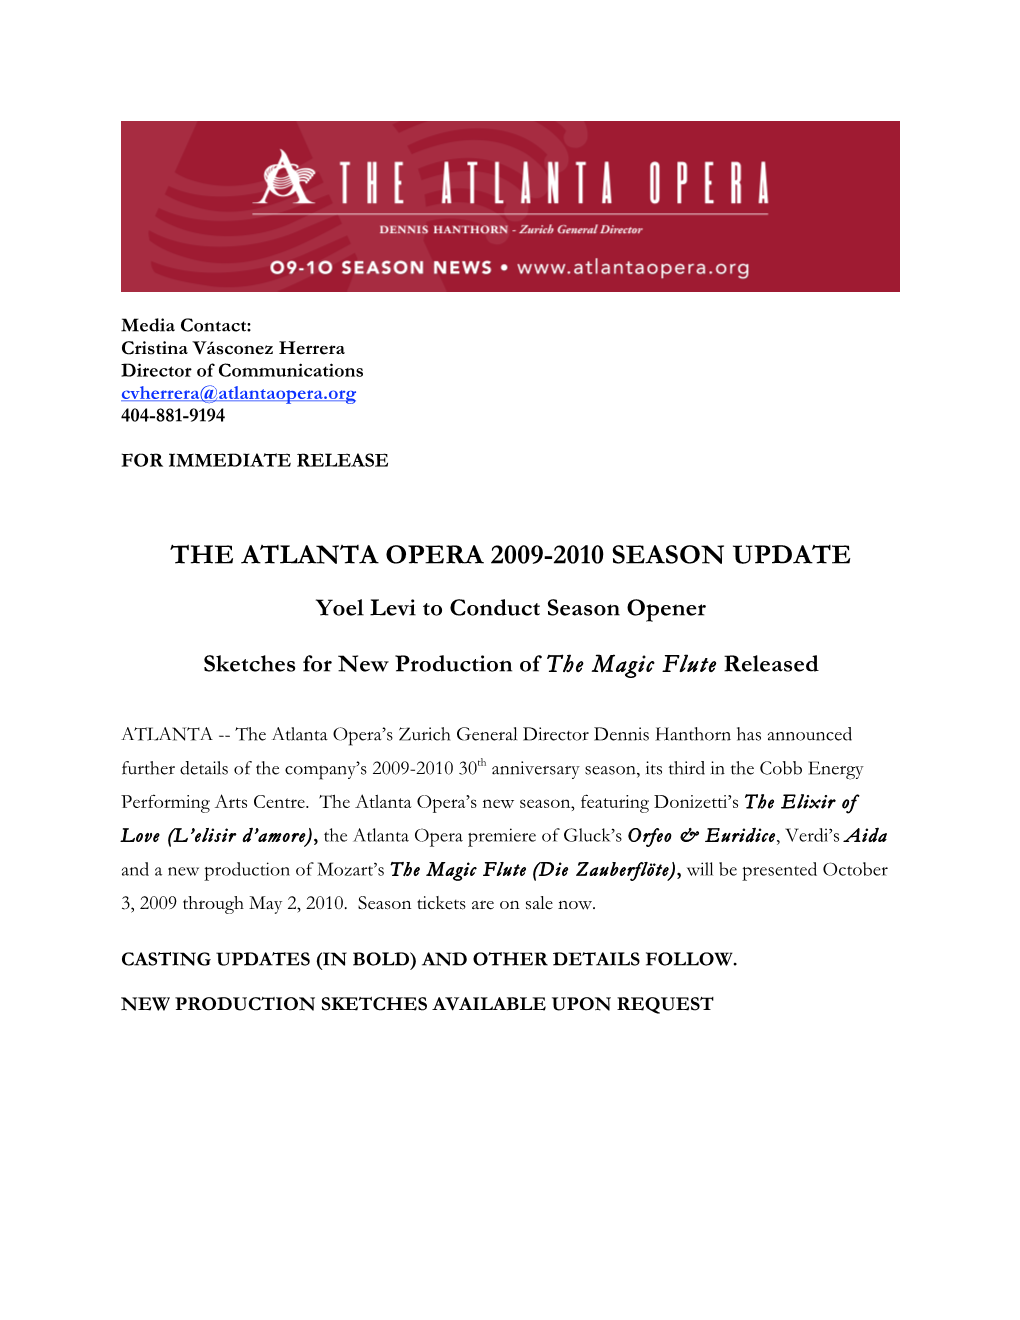 The Atlanta Opera 2009-2010 Season Update